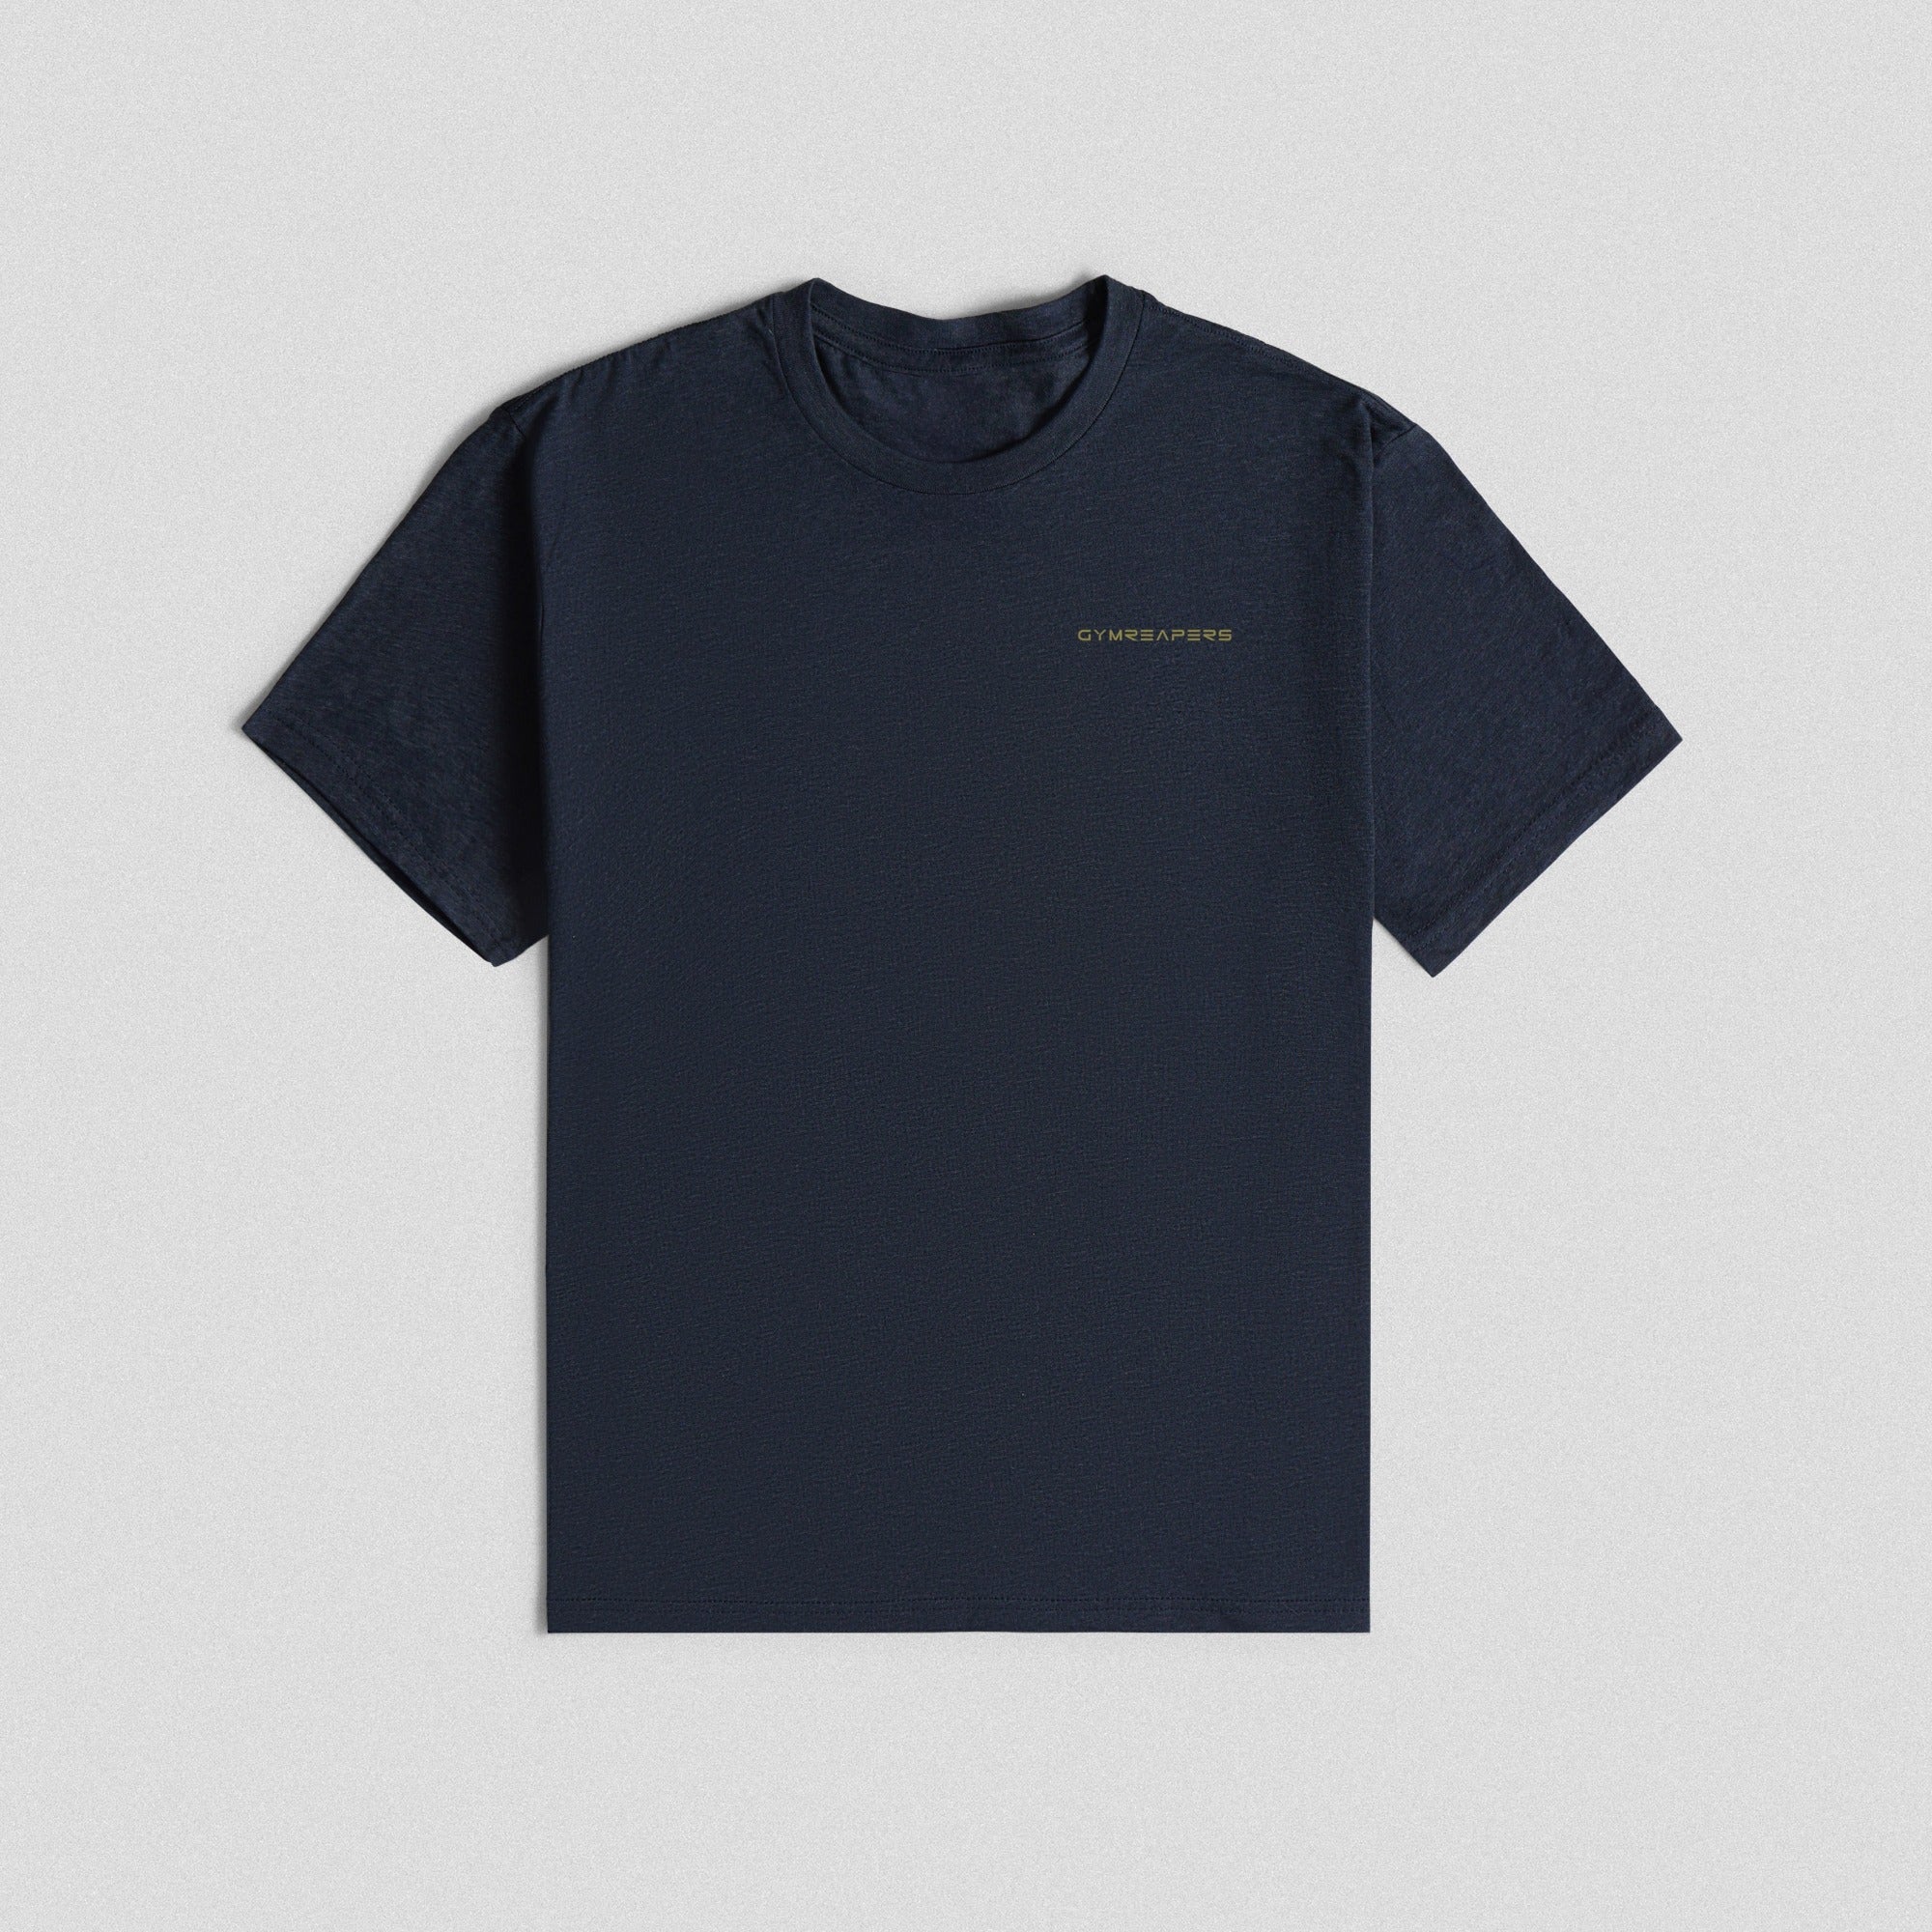 navy gold core logo shirt front